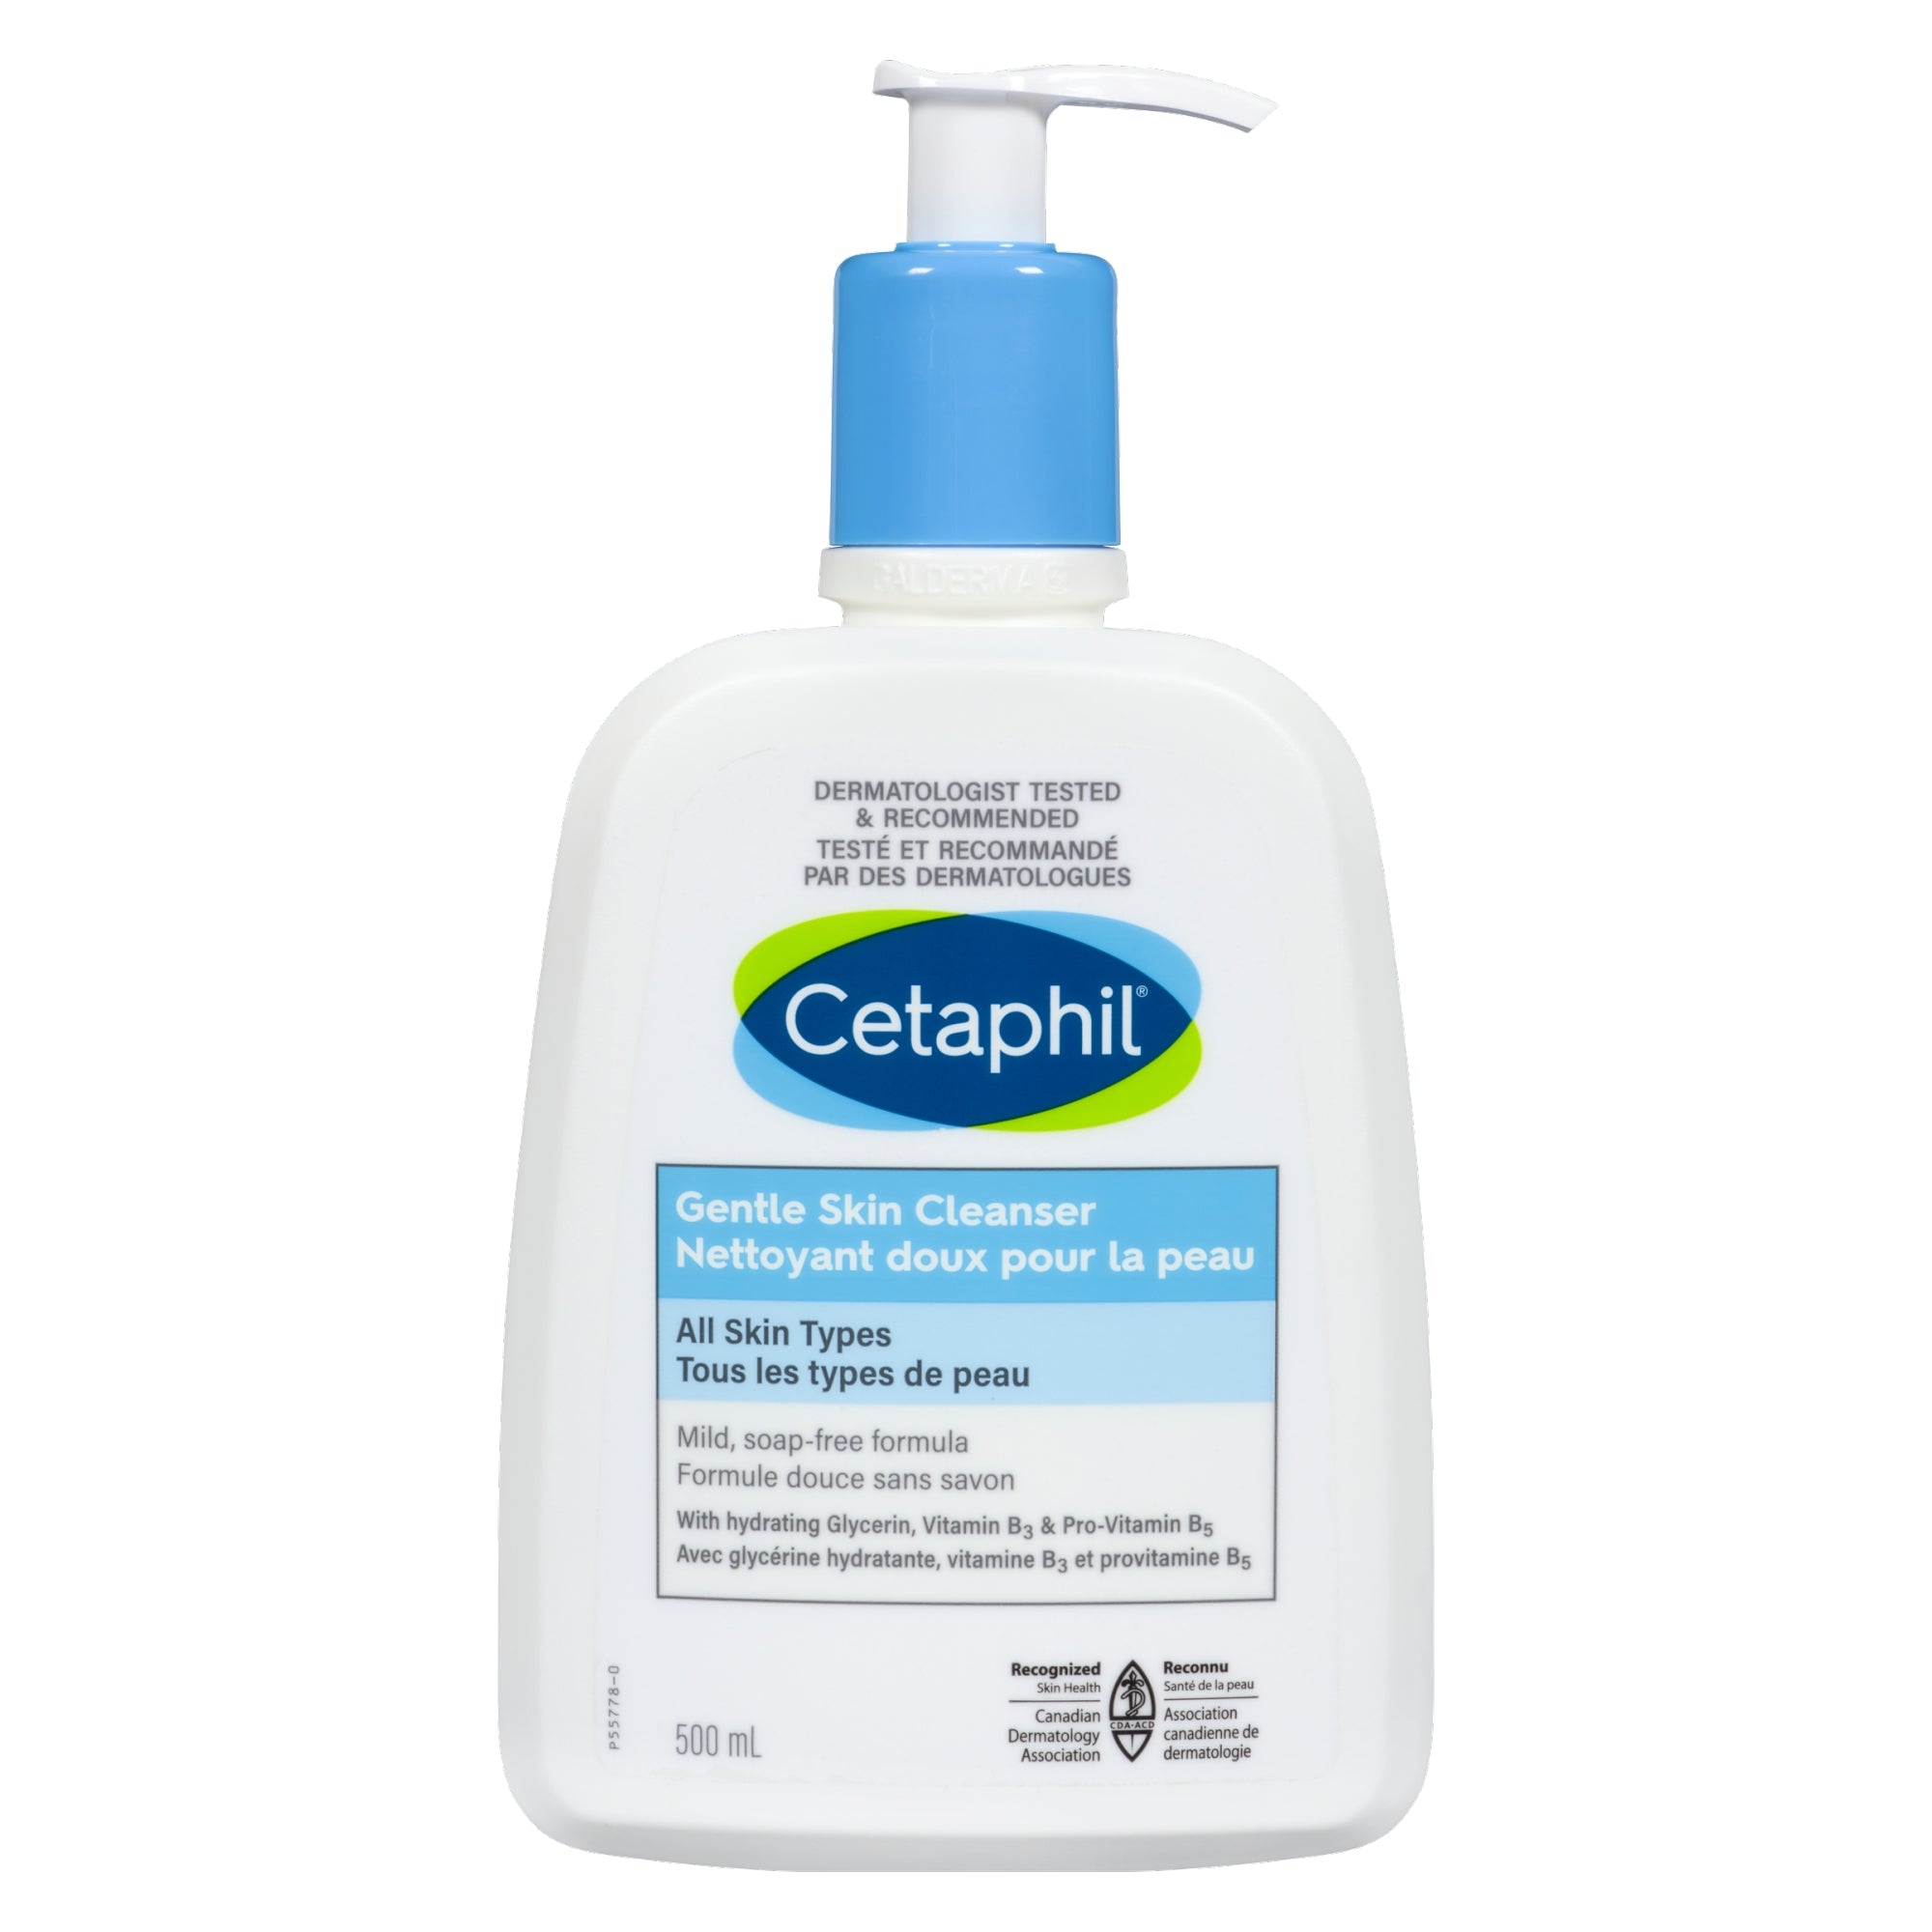 Cetaphil Gentle Skin Cleanser - 500ml $8.09 (instore only)